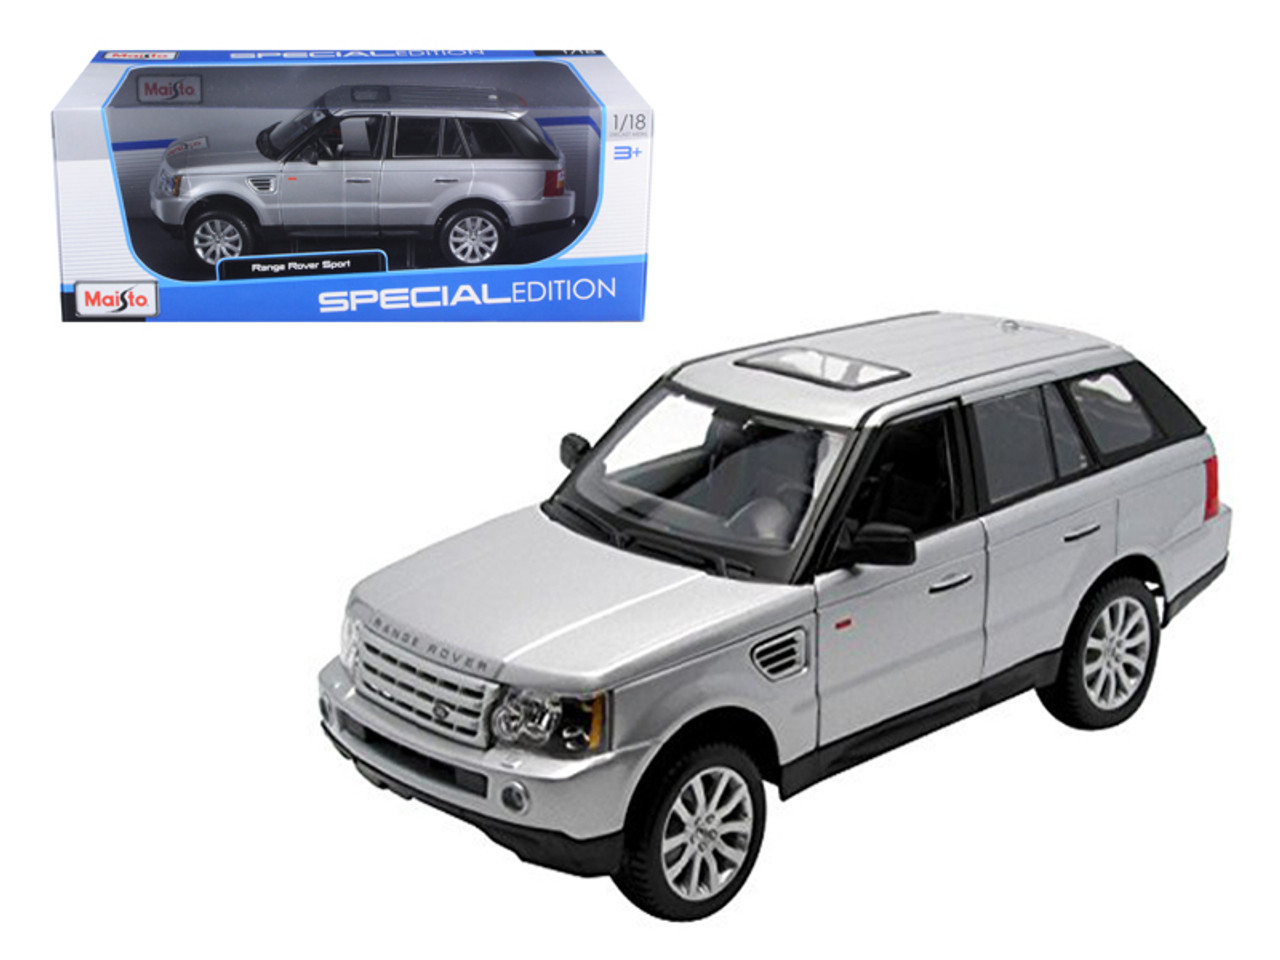 1/18 Maisto Range Rover Sport (Silver) Diecast Car Model